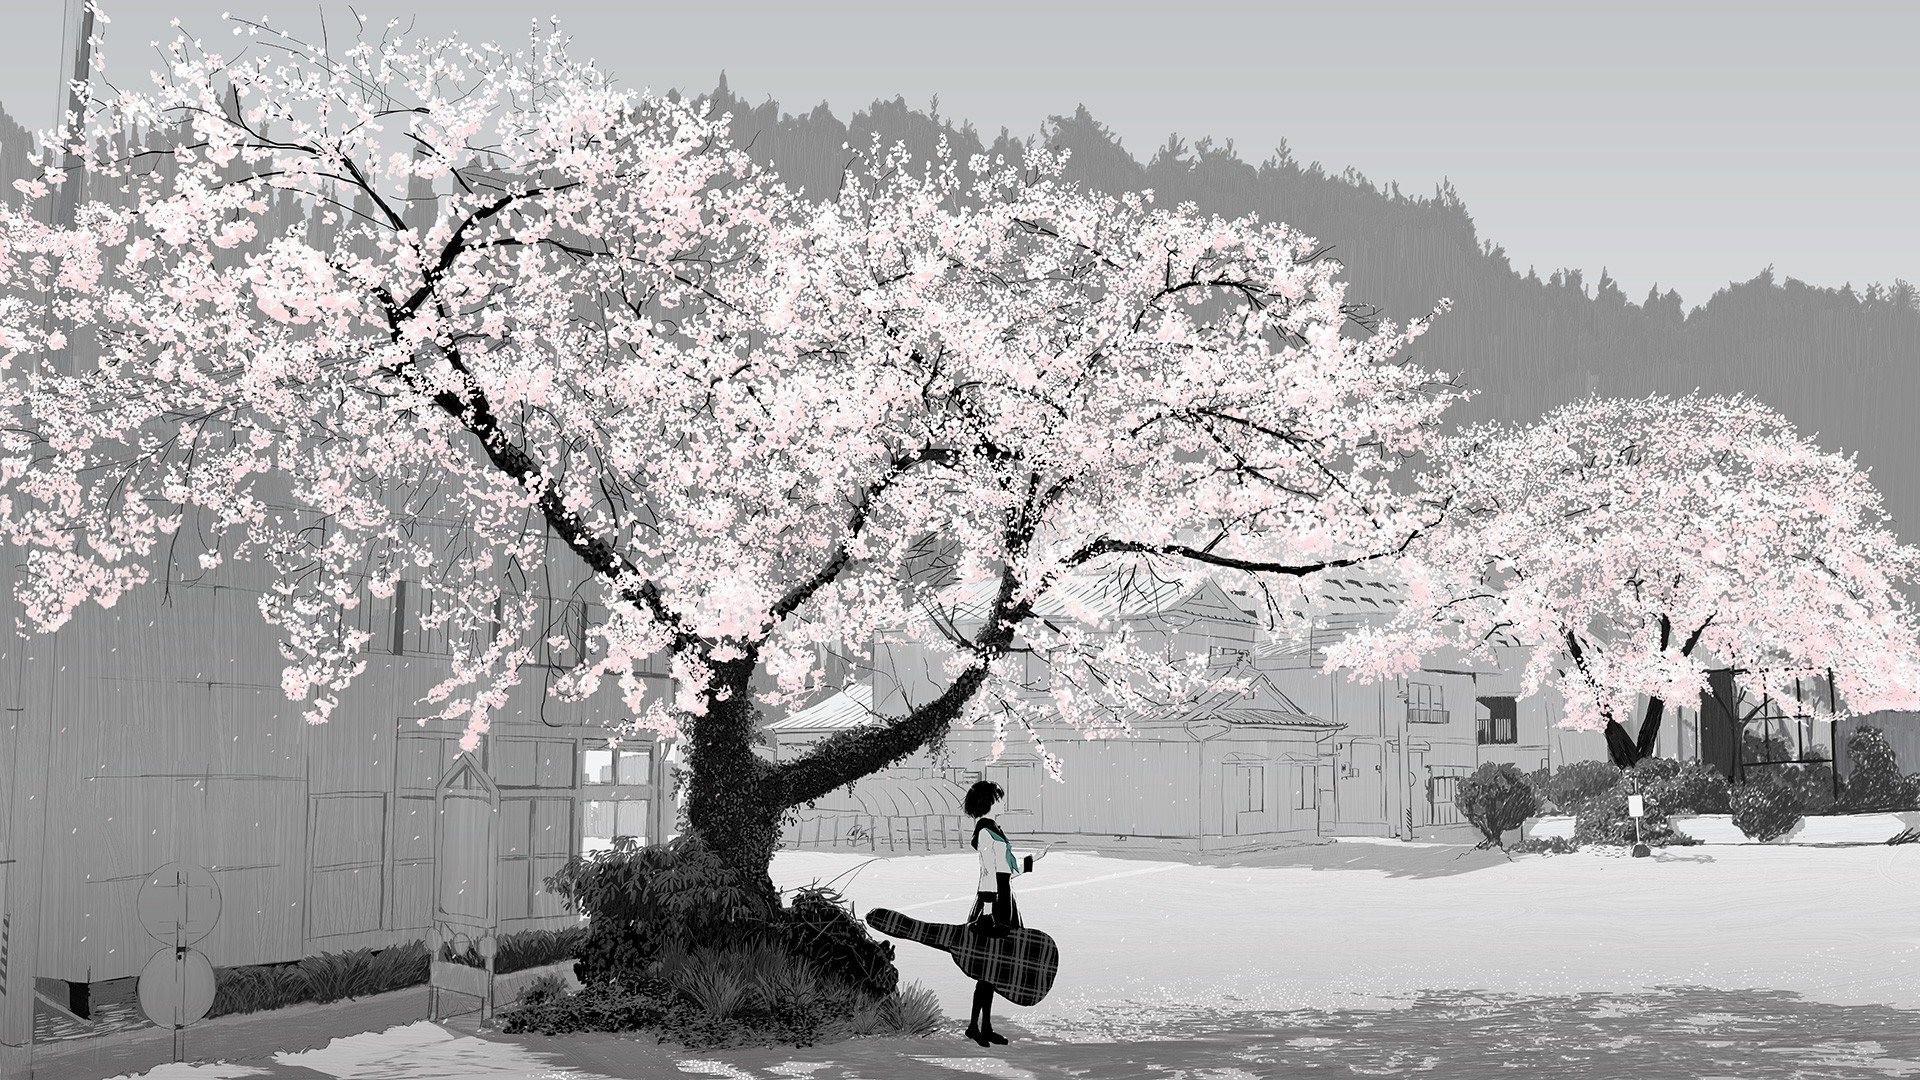 1920x1080 Anime Cherry Blossom Widescreen Wallpaper Download Anime Cherry Blossom  Image